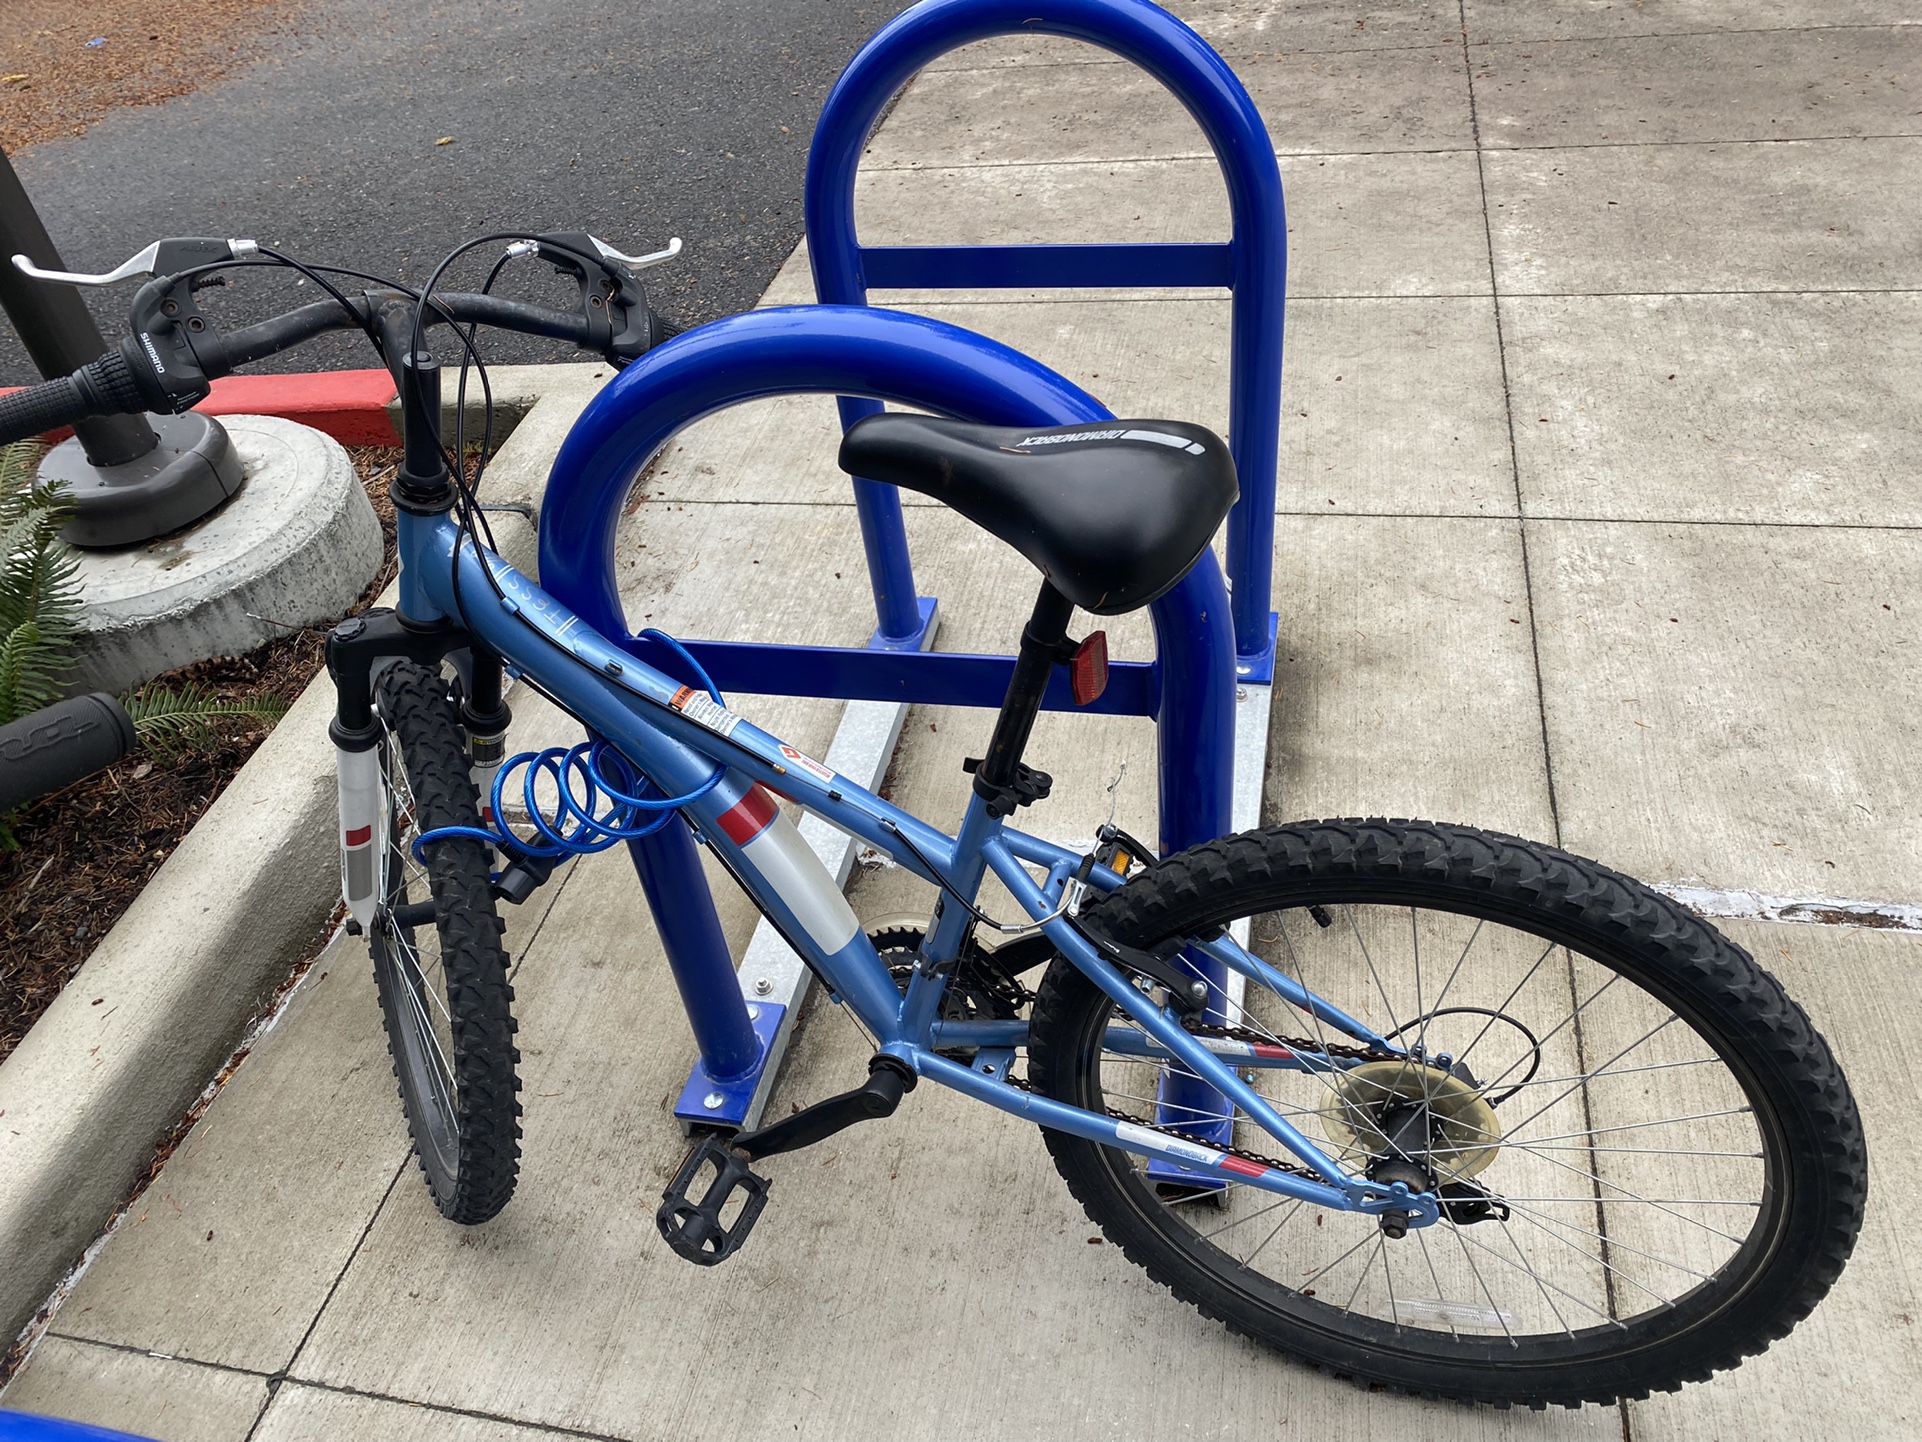 small blue bike price negotiable 